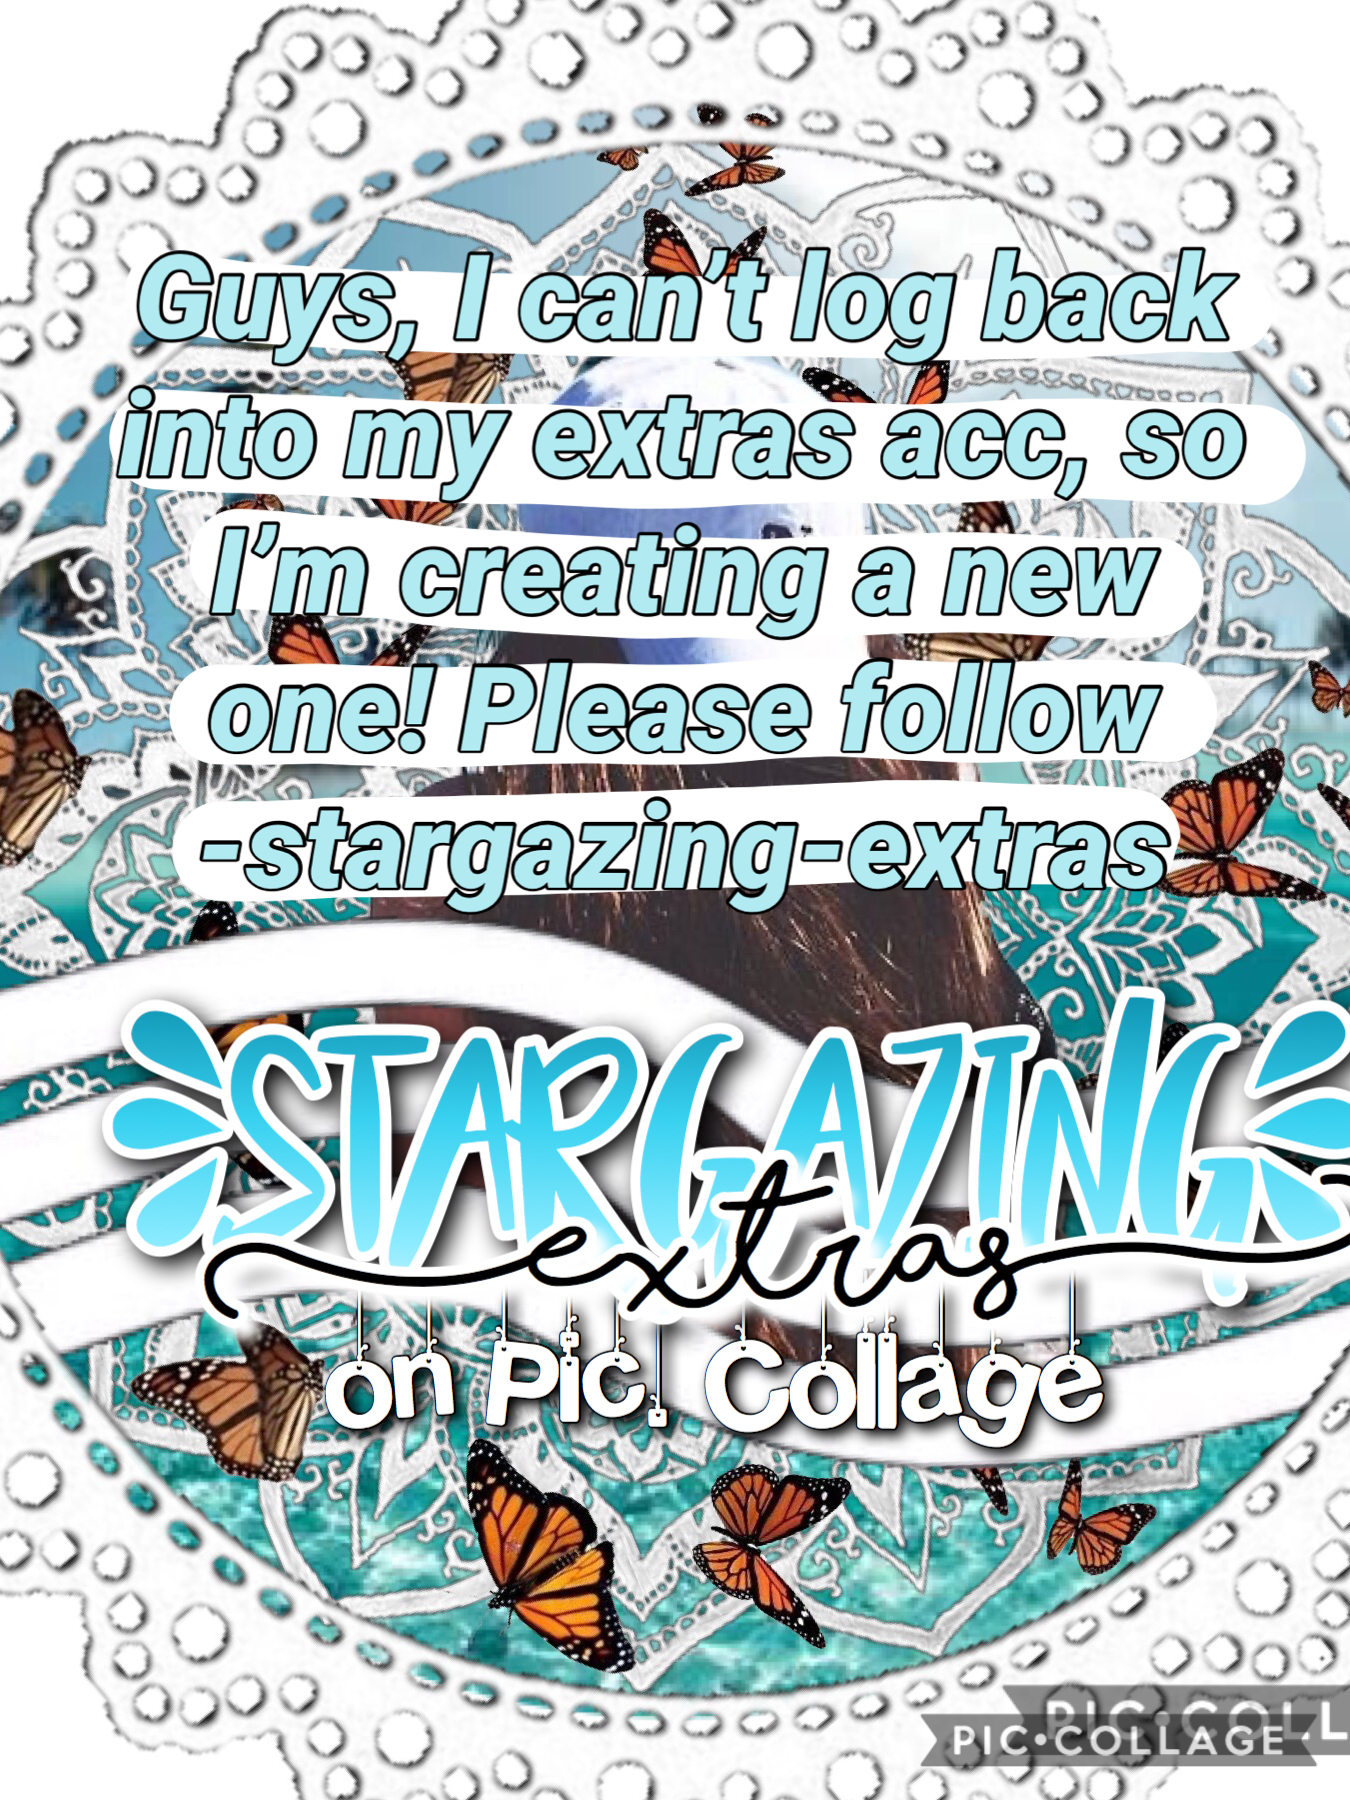 💜t a p💜
Go follow
-stargazing-extras!